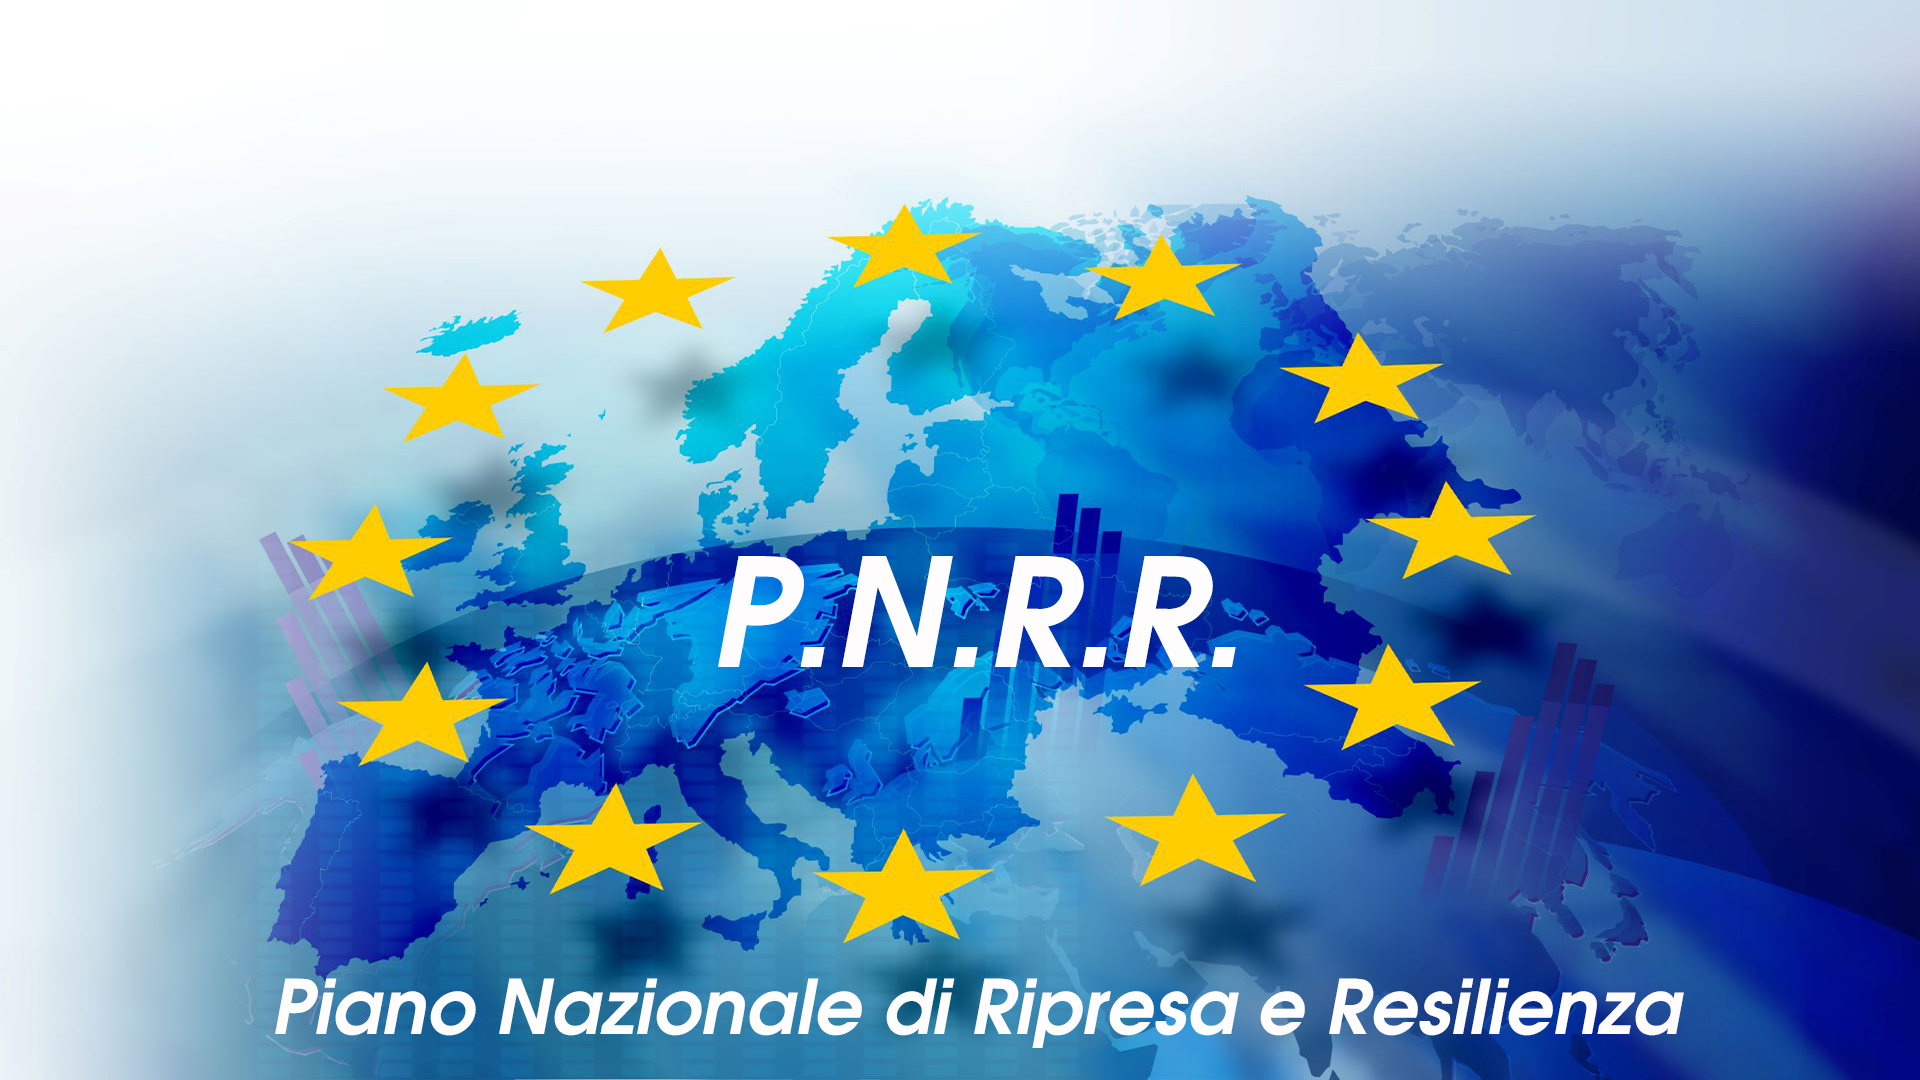 Logo pnrr next generation eu - fonte Regione Toscana